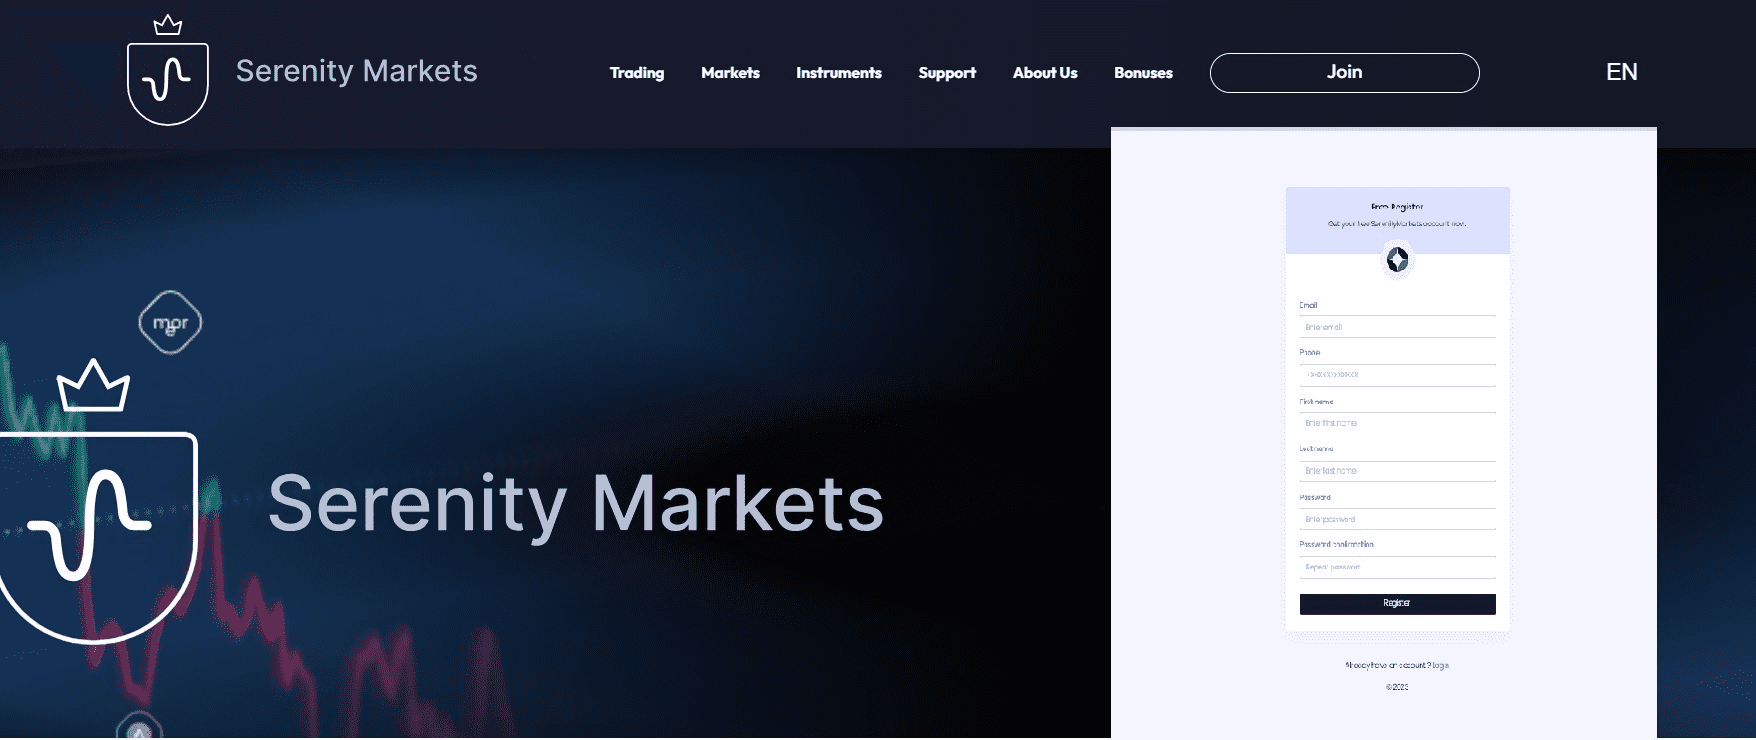  Брокерская компания Serenity Markets